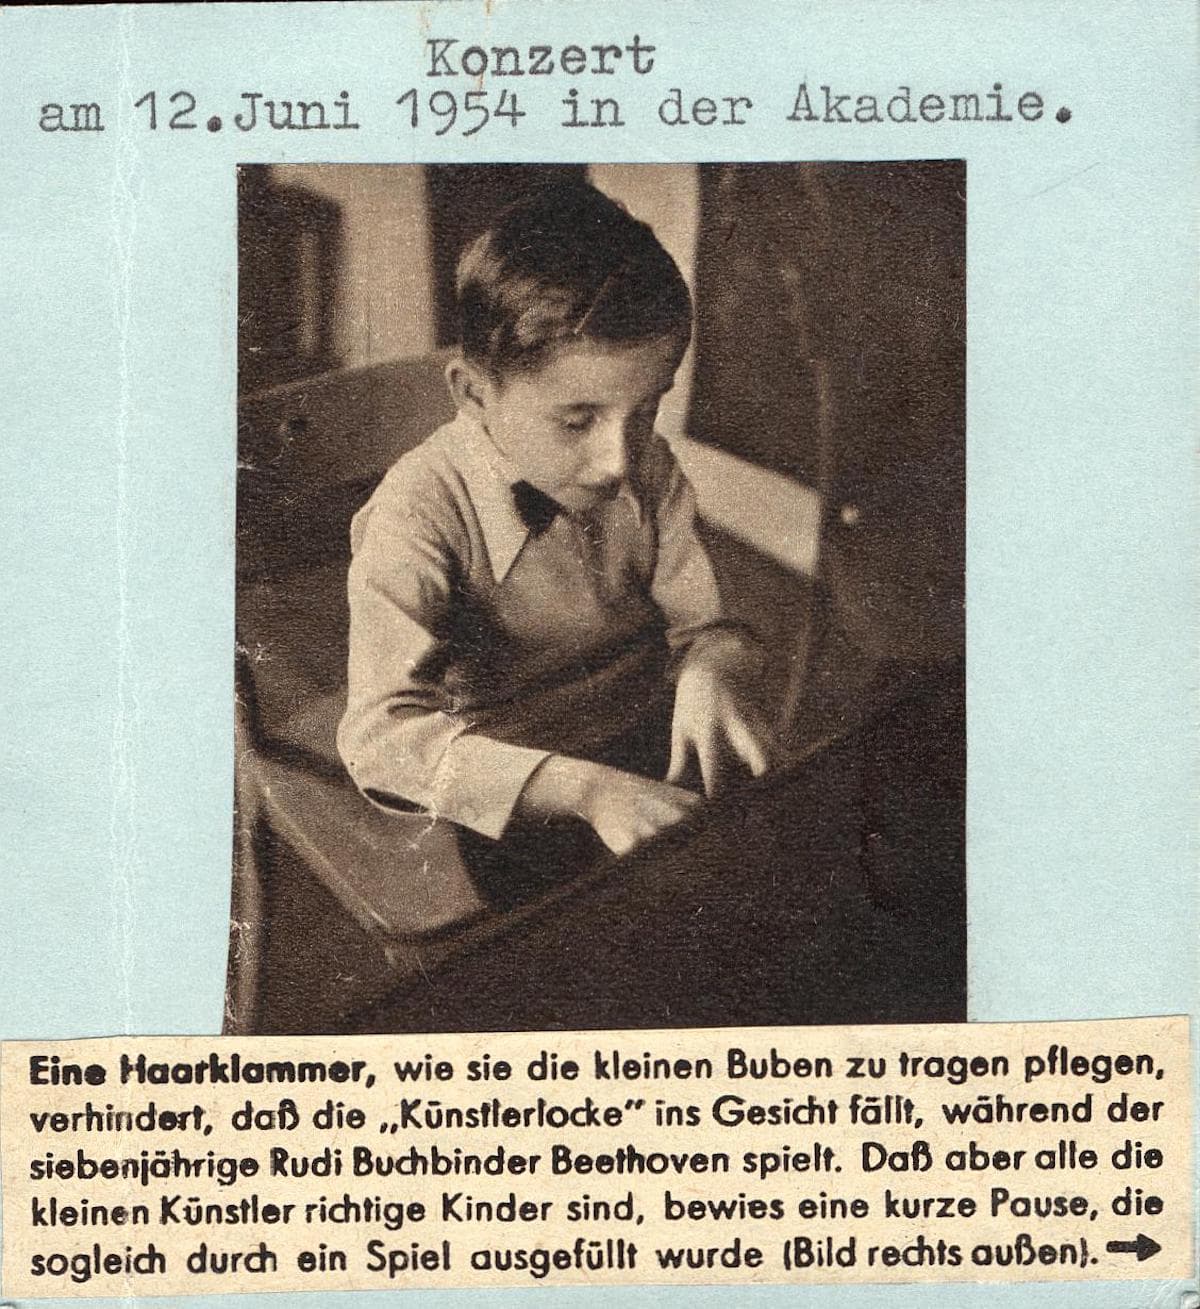 Photo of young Rudolf Buchbinder in 1954